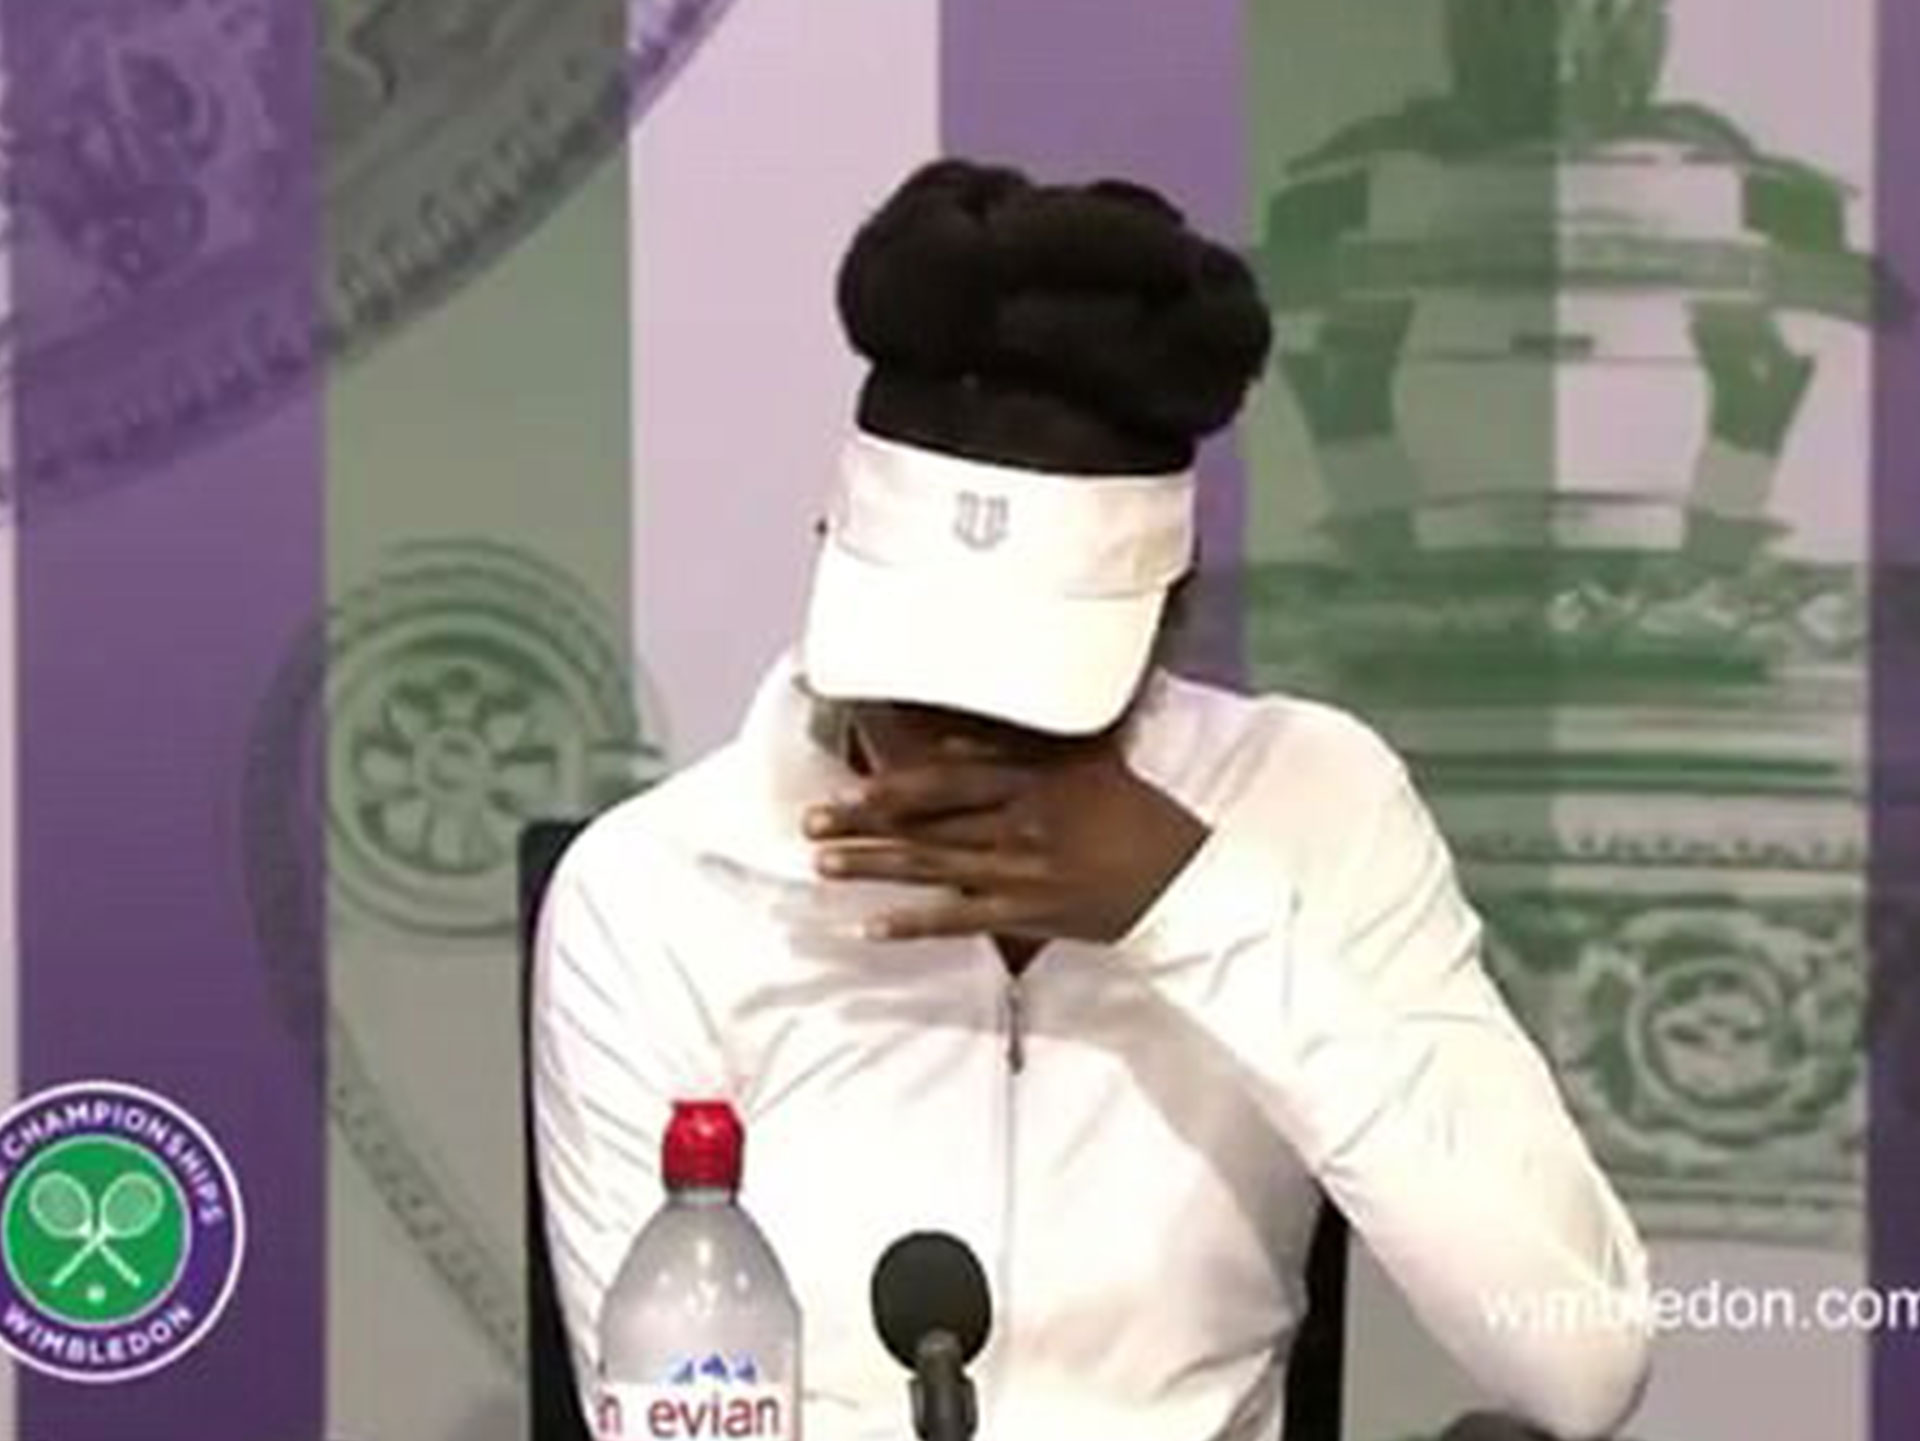 Venus Williams breaks down at Wimbledon press conference after questions about fatal car crash